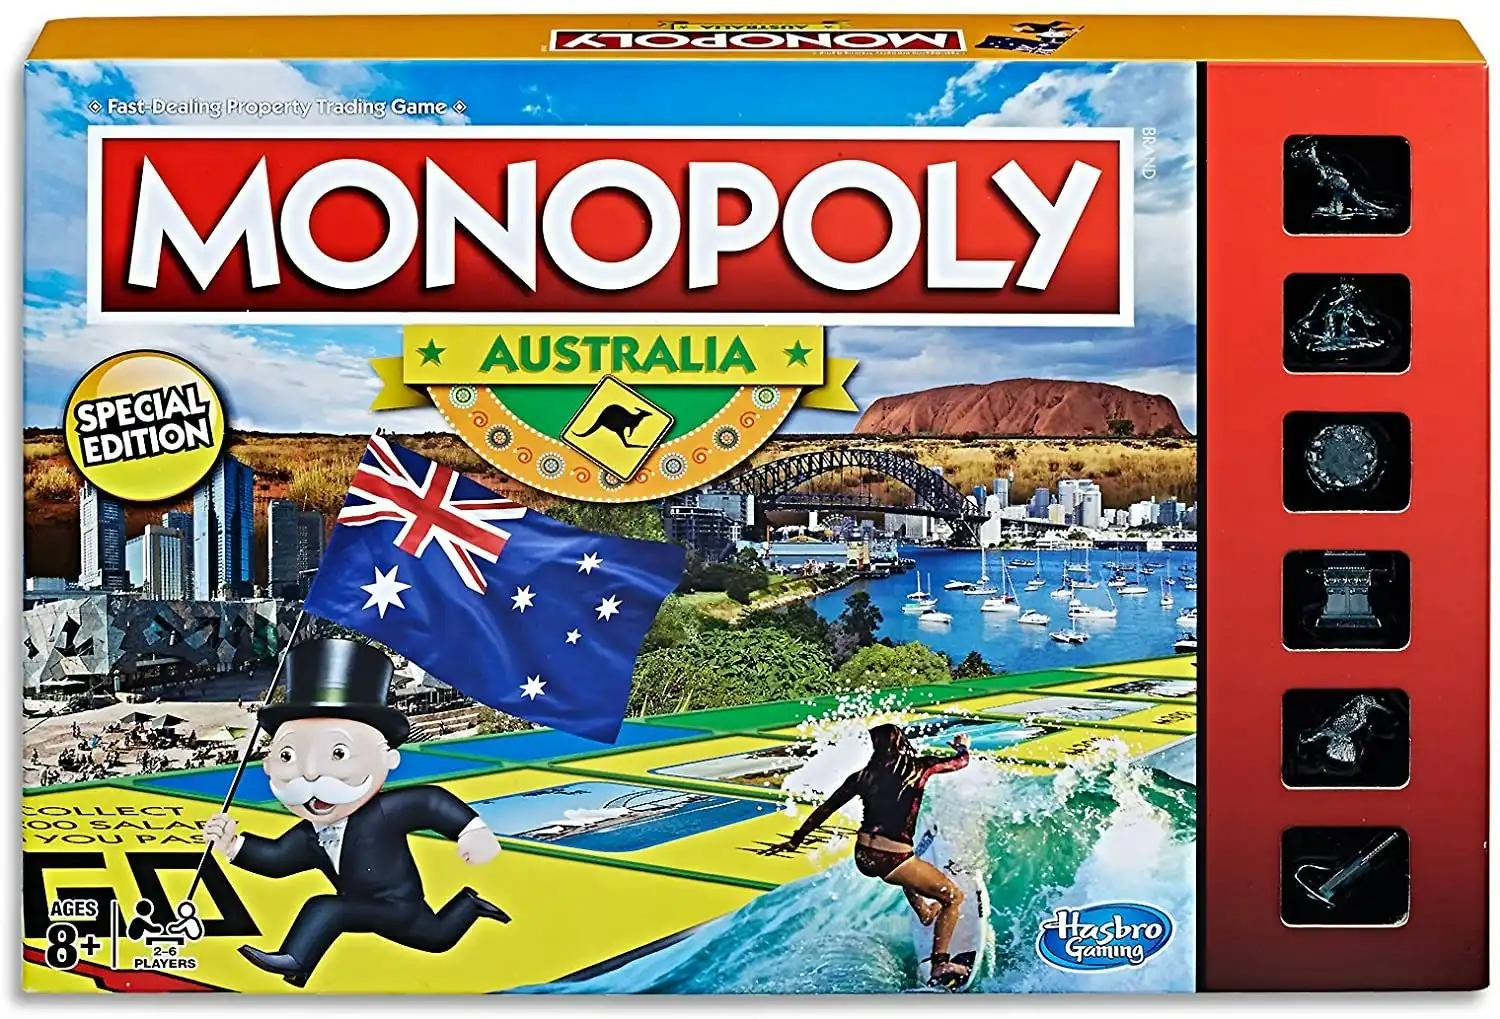 Monopoly -  Australia Special Edition Family Board Game - Australia's Best-loved Board Game Hasbro